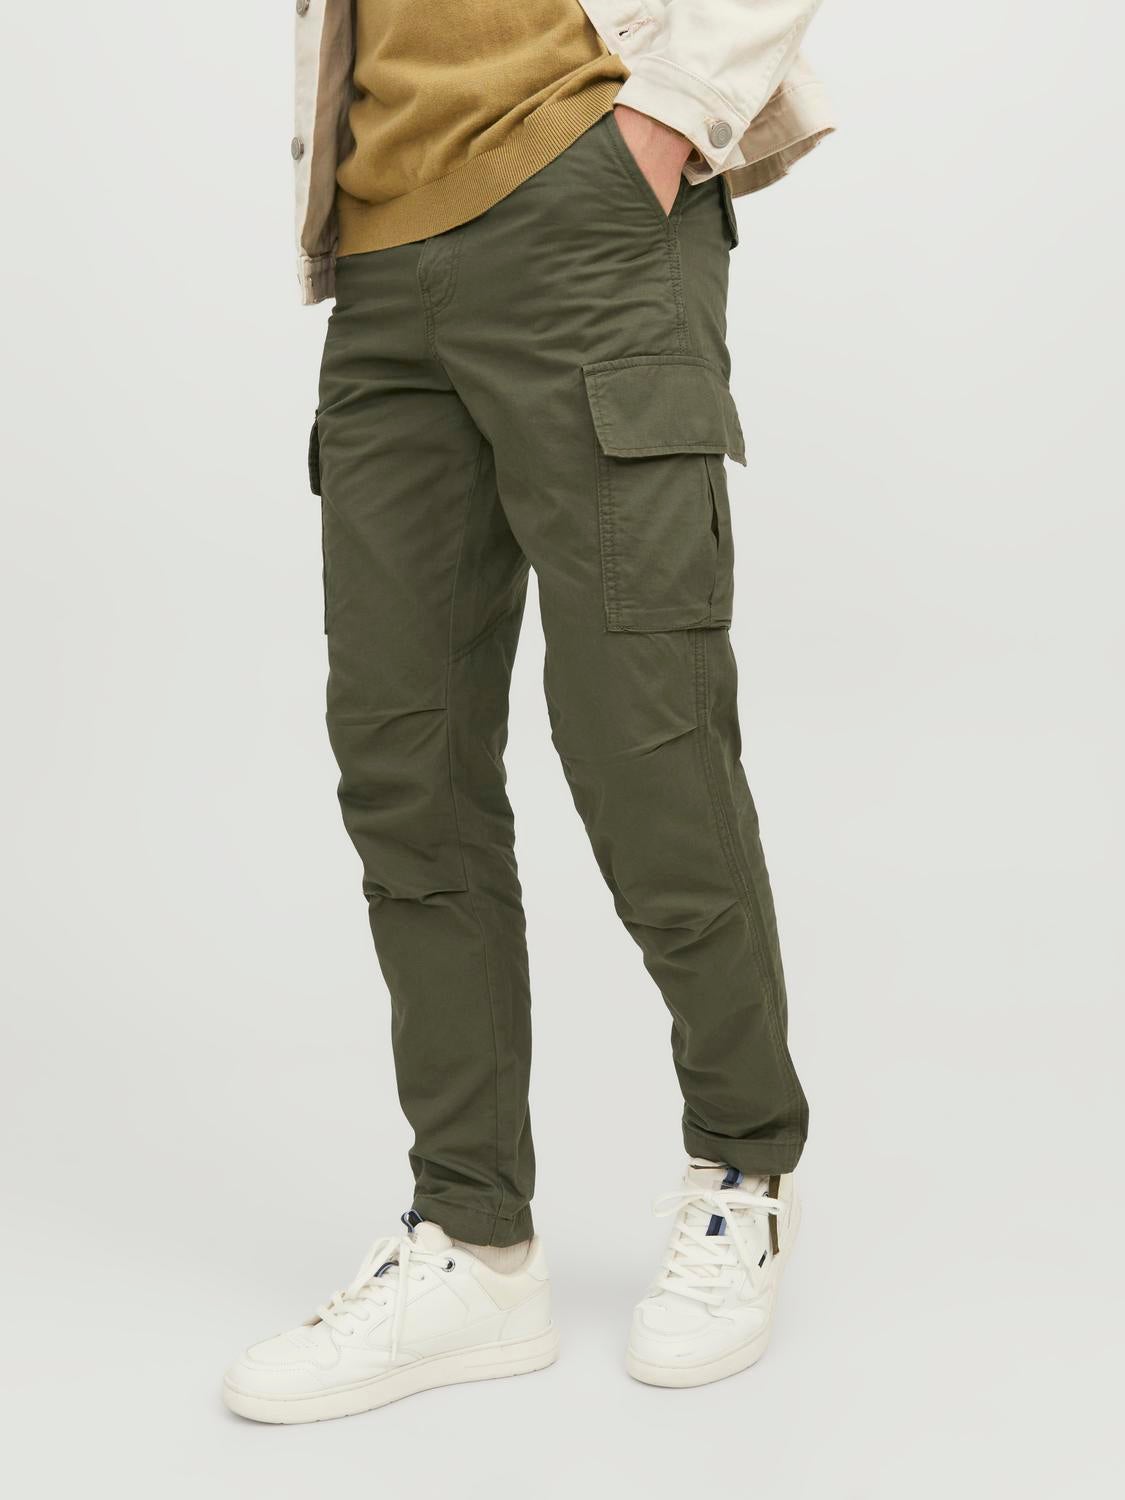 Jack Jones Cargo Trousers Apparel - Buy Jack Jones Cargo Trousers Apparel  online in India